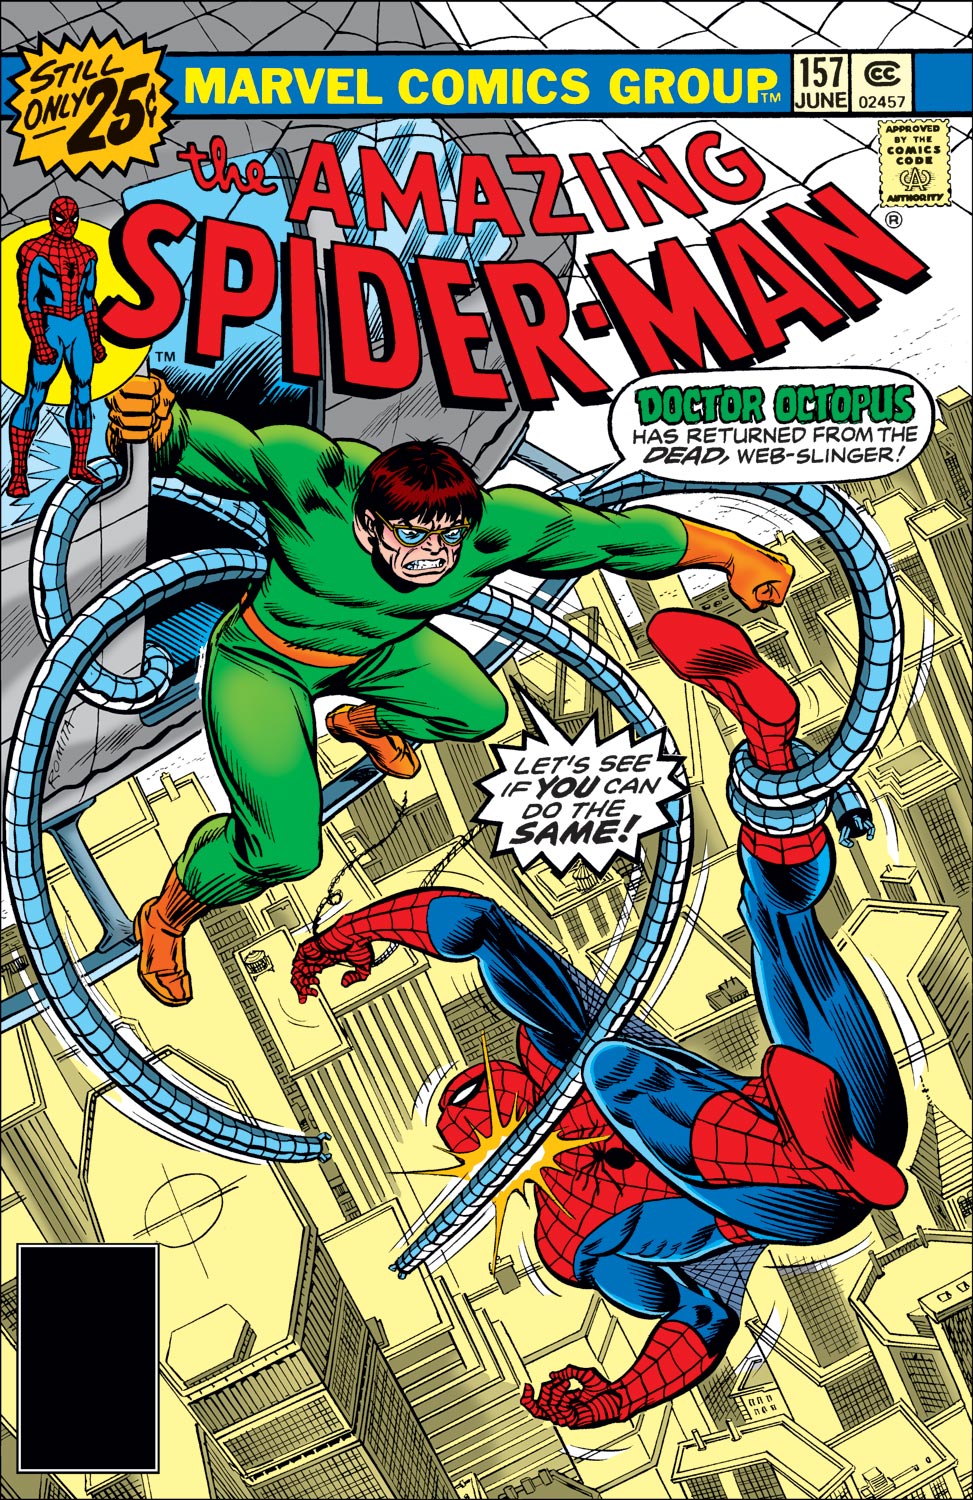 The Amazing Spider-Man (1963) #157